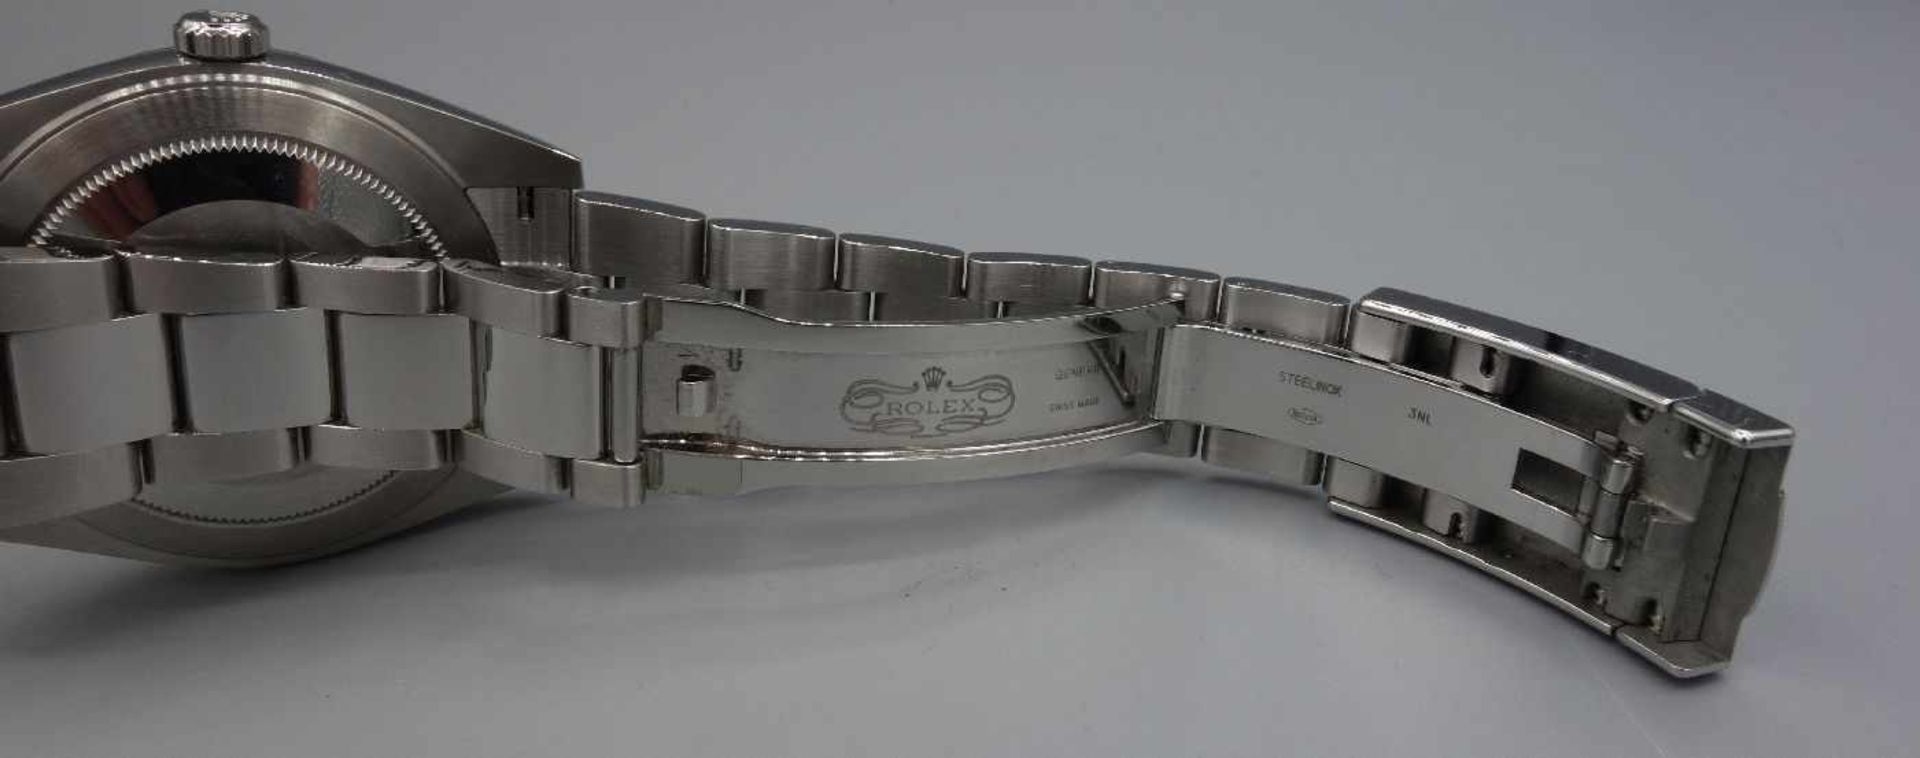 ARMBANDUHR - ROLEX OYSTER PERPETUAL DATEJUST / wristwatch, Rolex Watch Company / Schweiz, erworben - Image 11 of 15